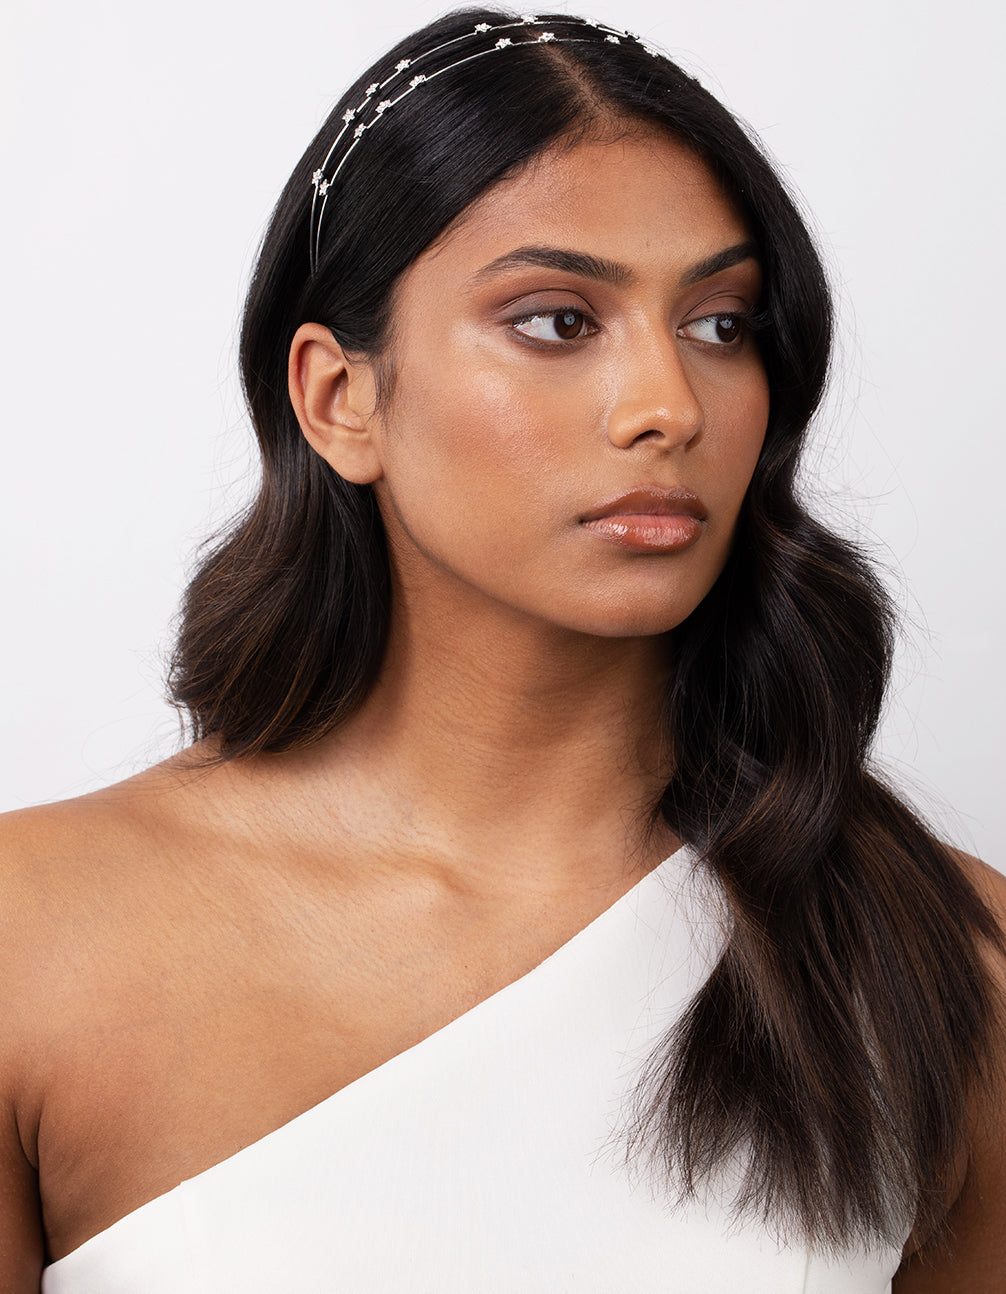 New 5 Women Hair Accessories Pendant Charms Rings Set Hair Clip Headband  Accessory For Pierced Braid From Funnail, $2.08